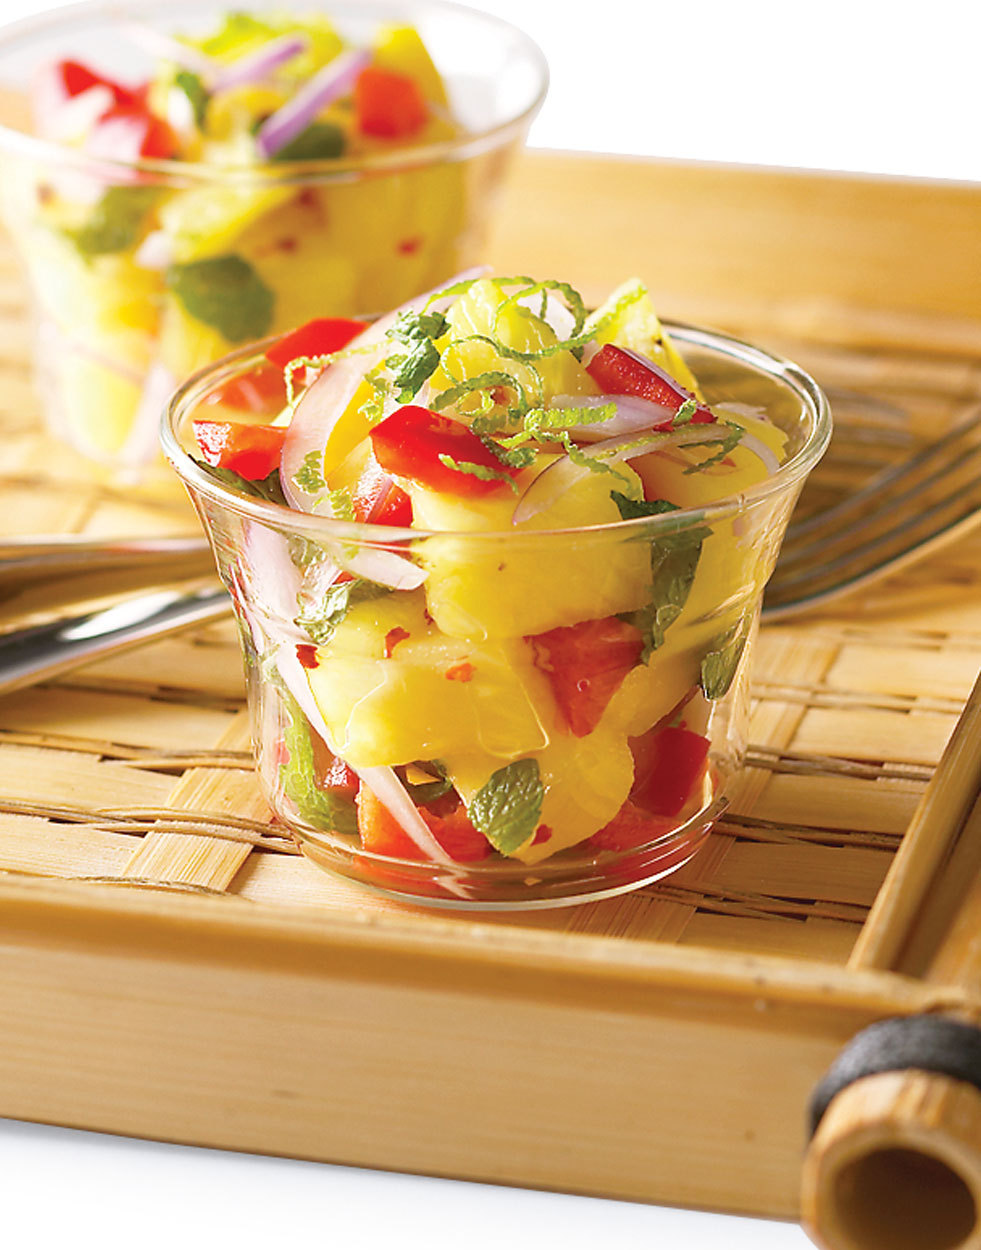 Sweet & Spicy Pineapple Salad Recipe